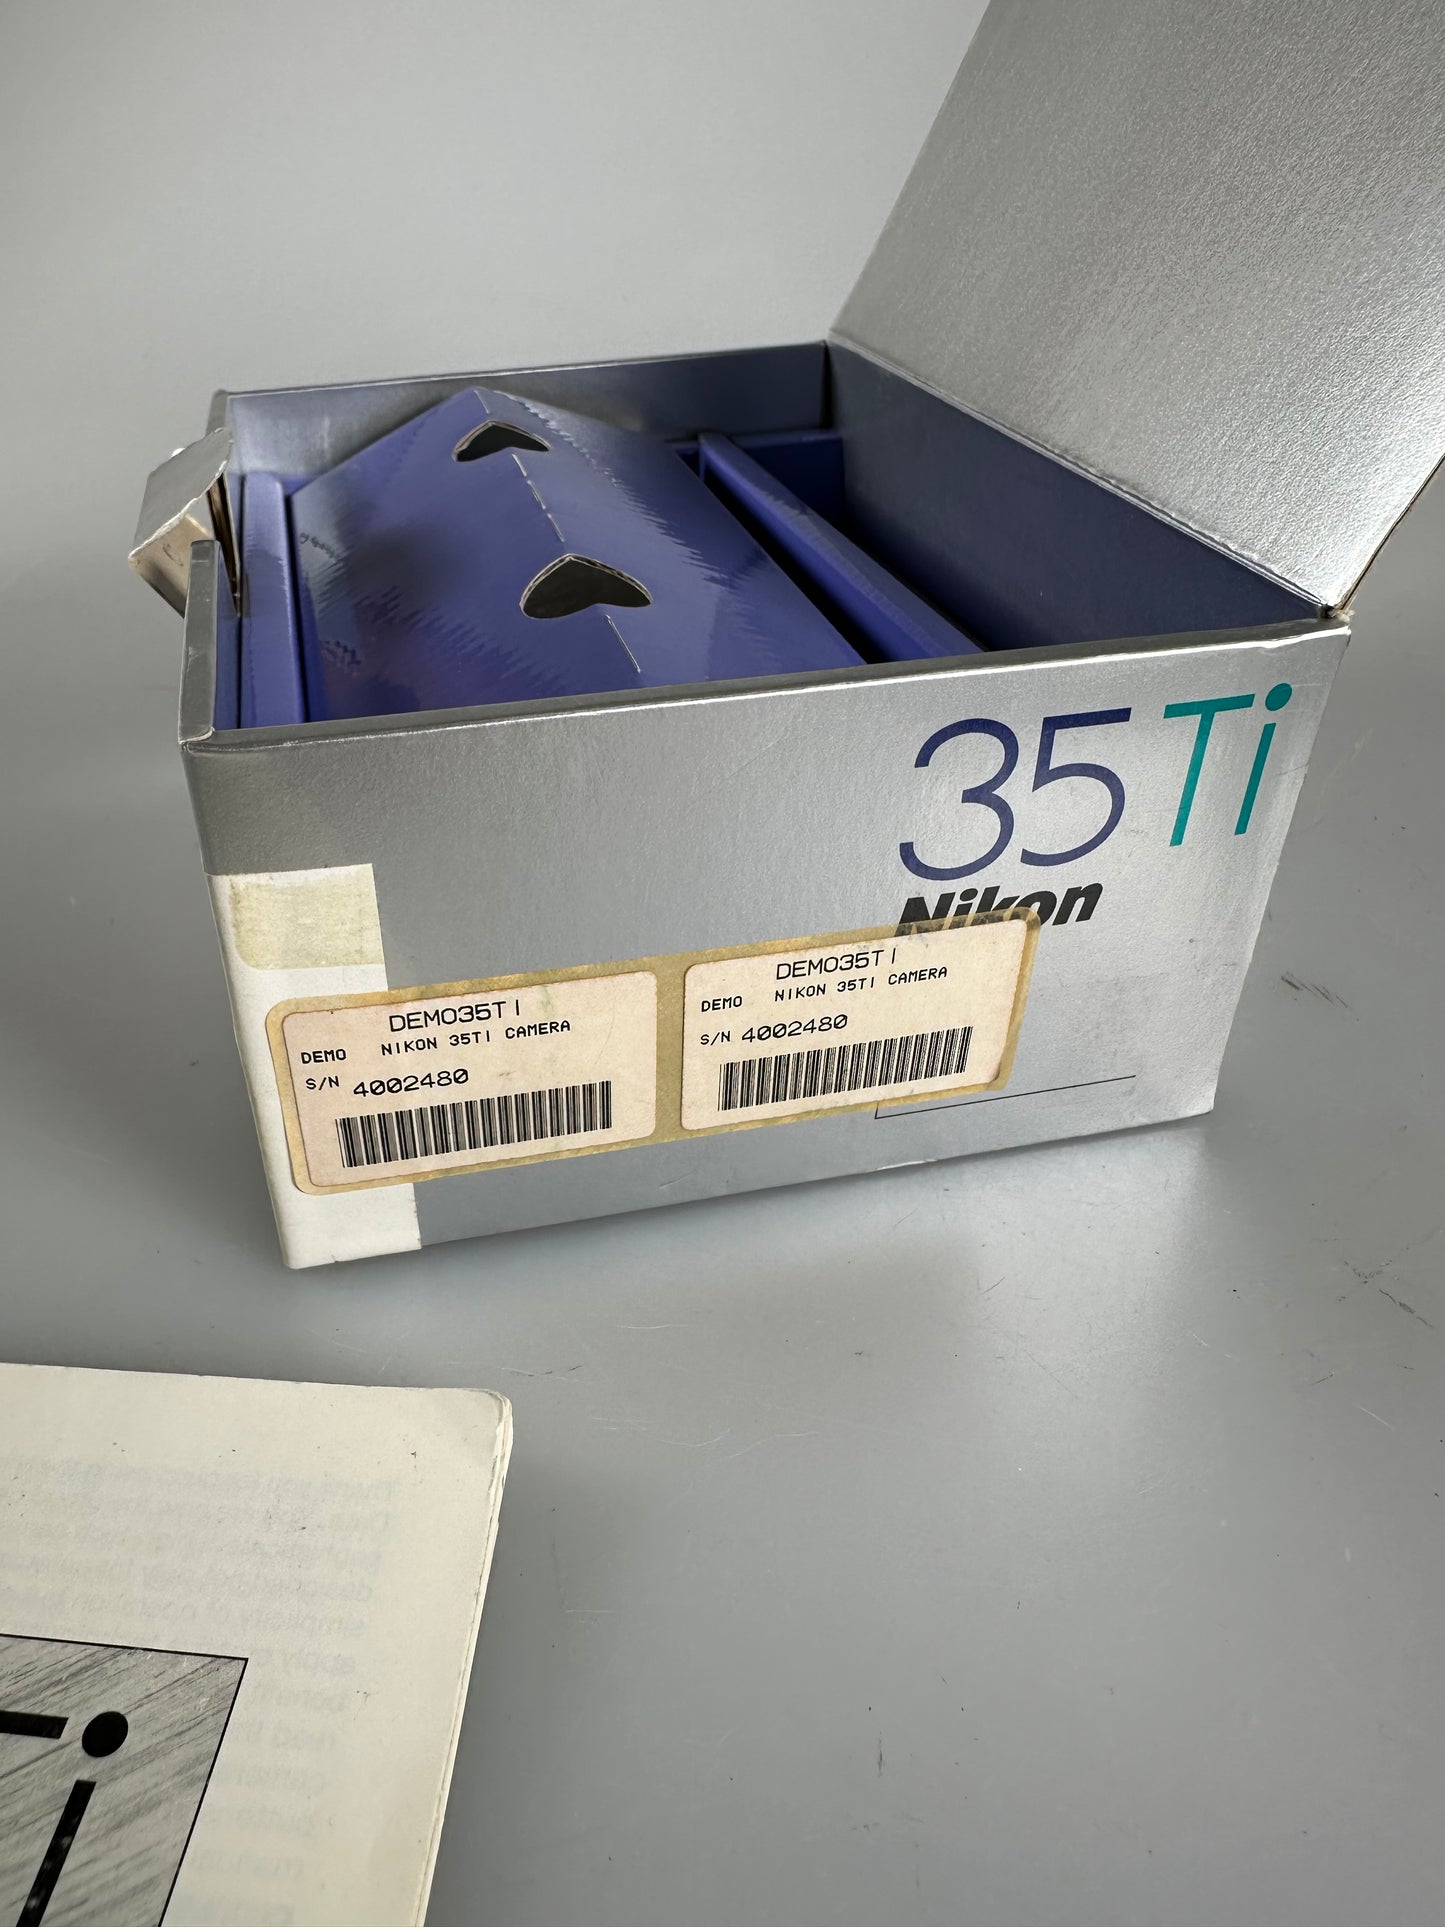 Nikon 35 Ti Quartz Date - Instruction Manual Guide Book and box